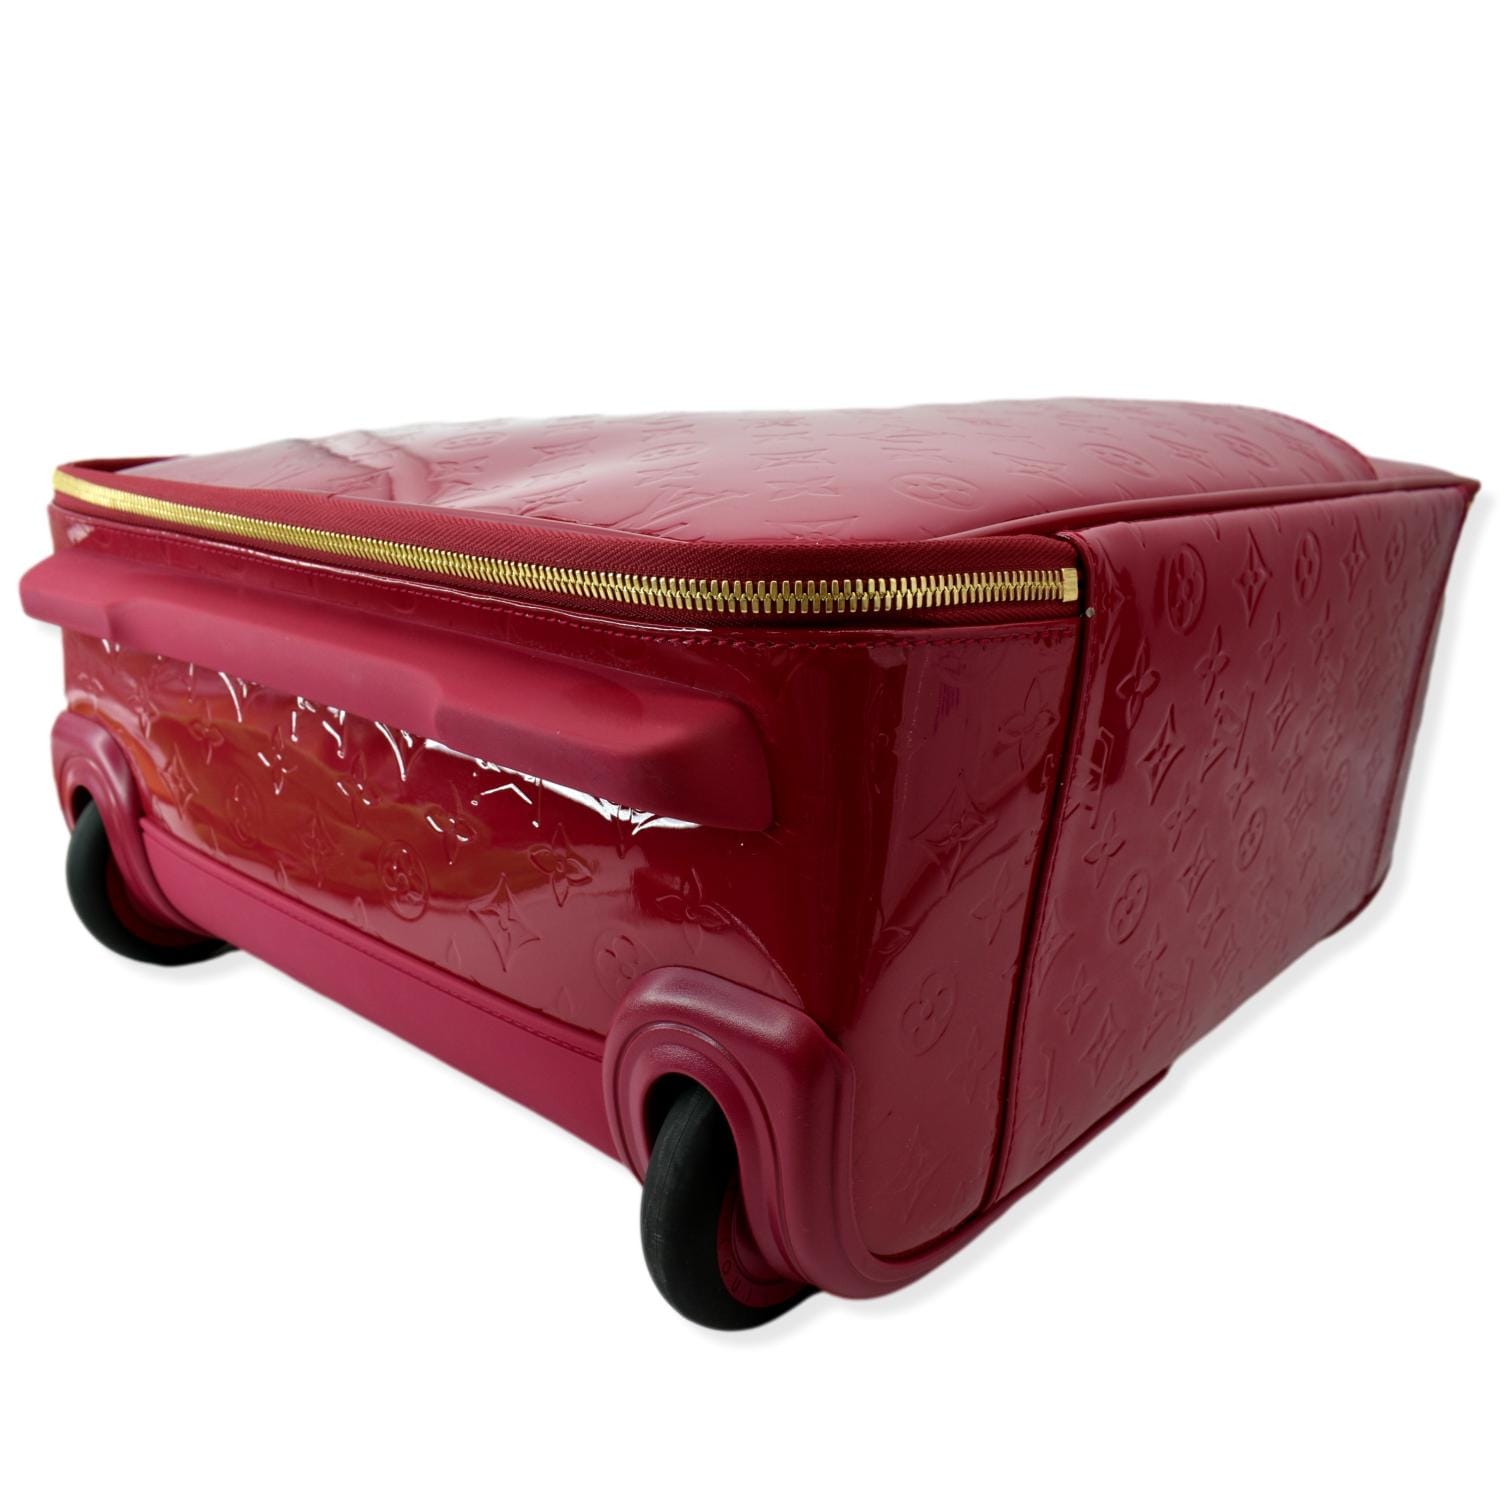 Authentic Louis Vuitton Pink Monogram Vernis Leather Pegase 45 Luggage